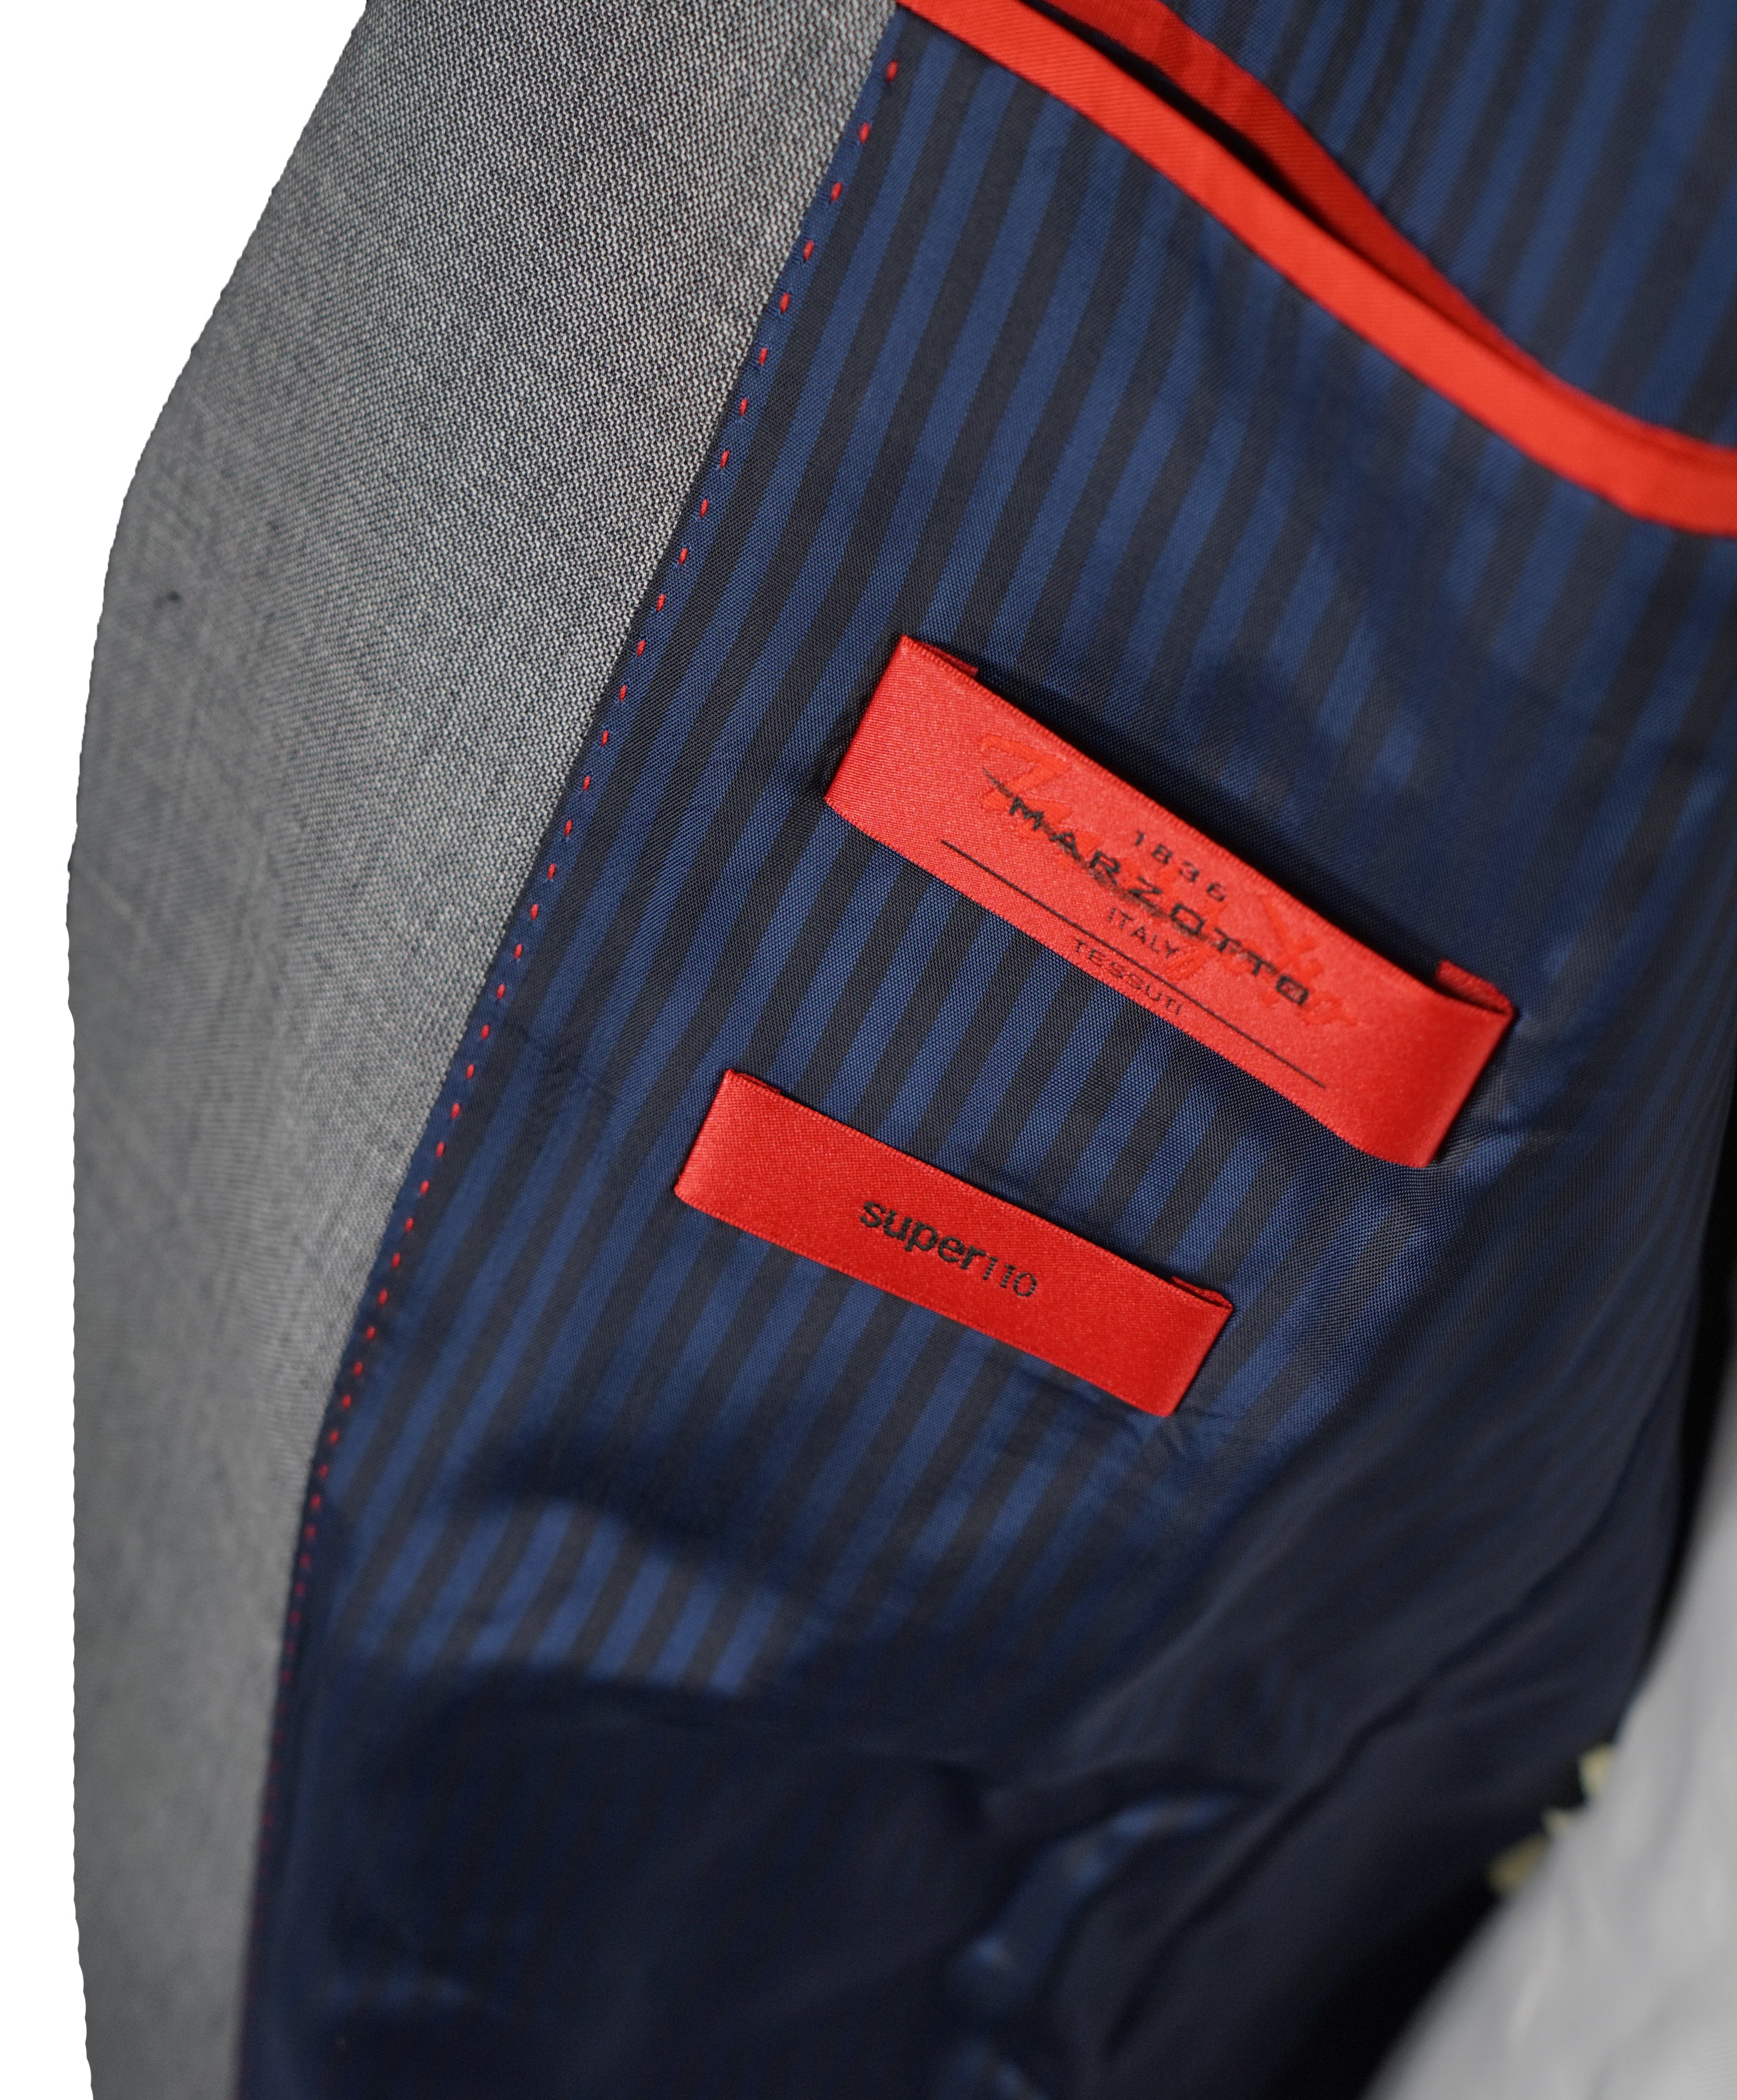 HUGO BOSS - HUGO Slim Super 110 Marzotto Italy Fabric Gray Textured Su ...